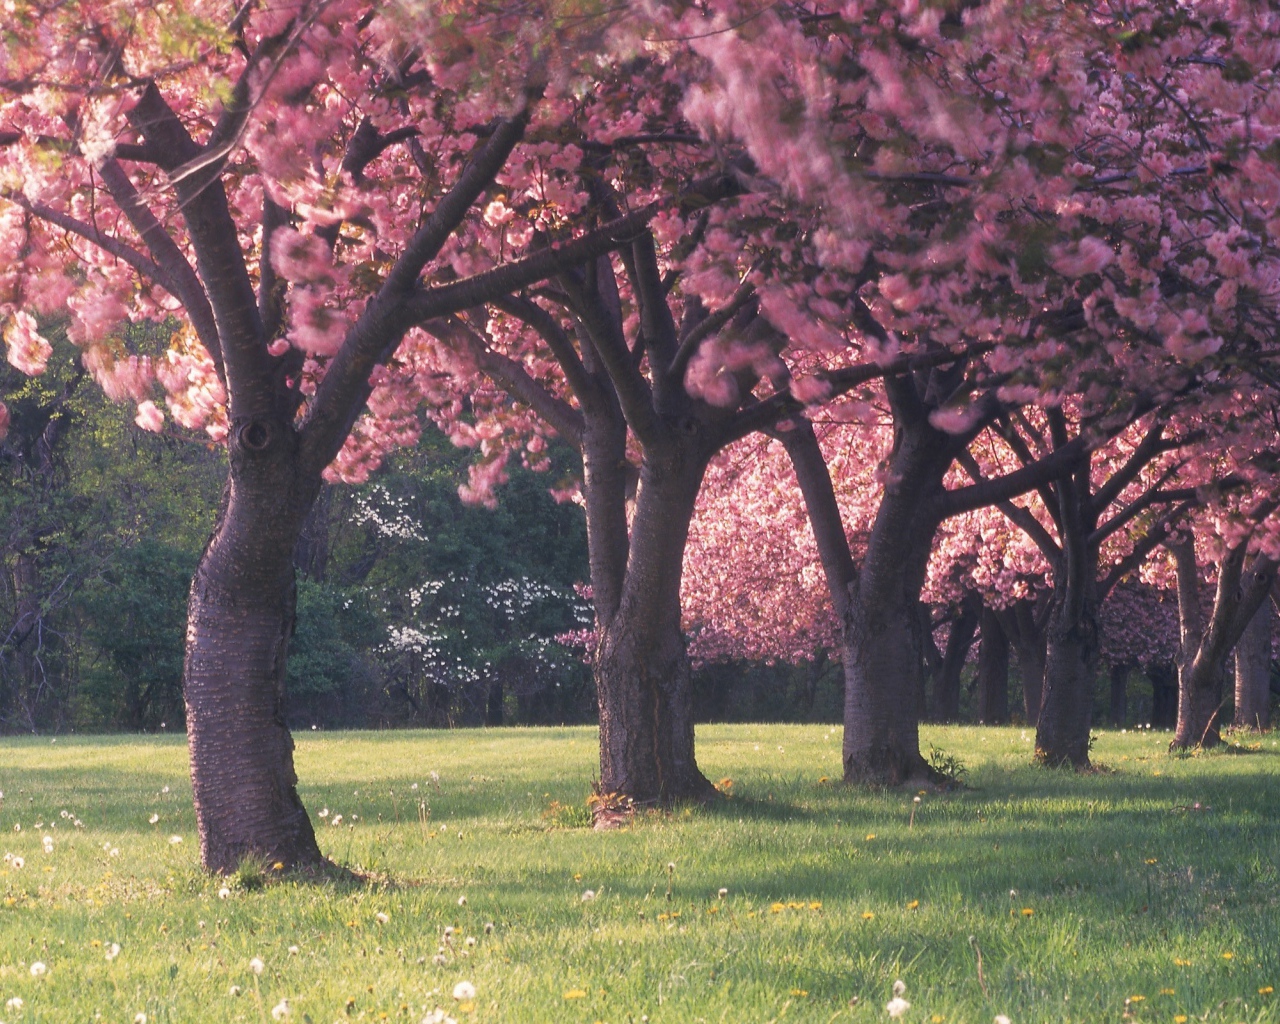 Trees in spring flowers